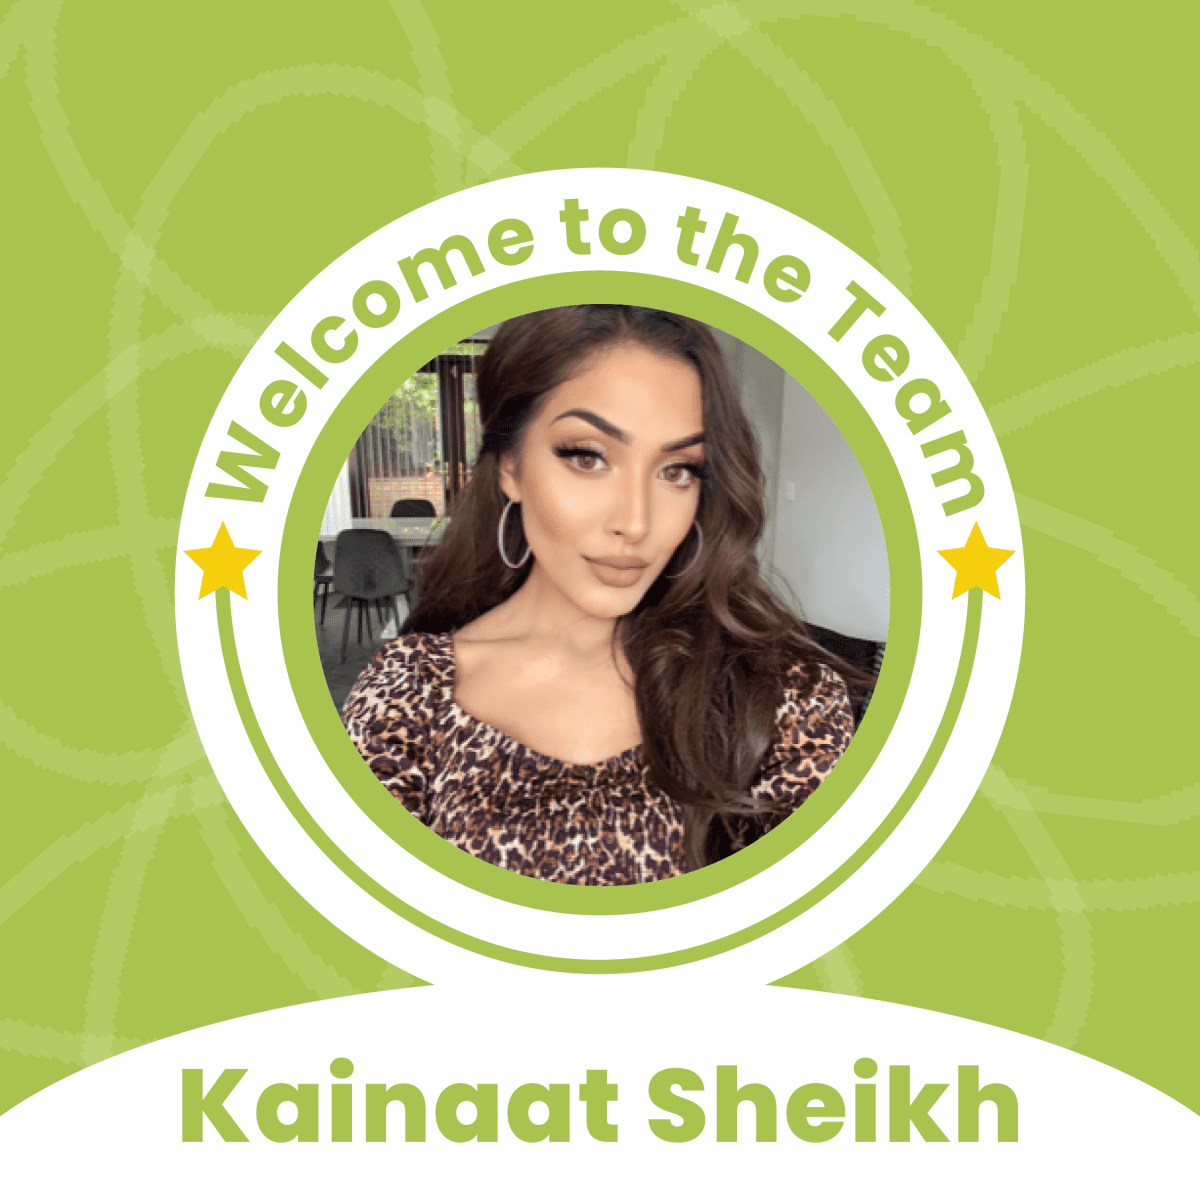 Welcome to the team Kainaat Sheikh!